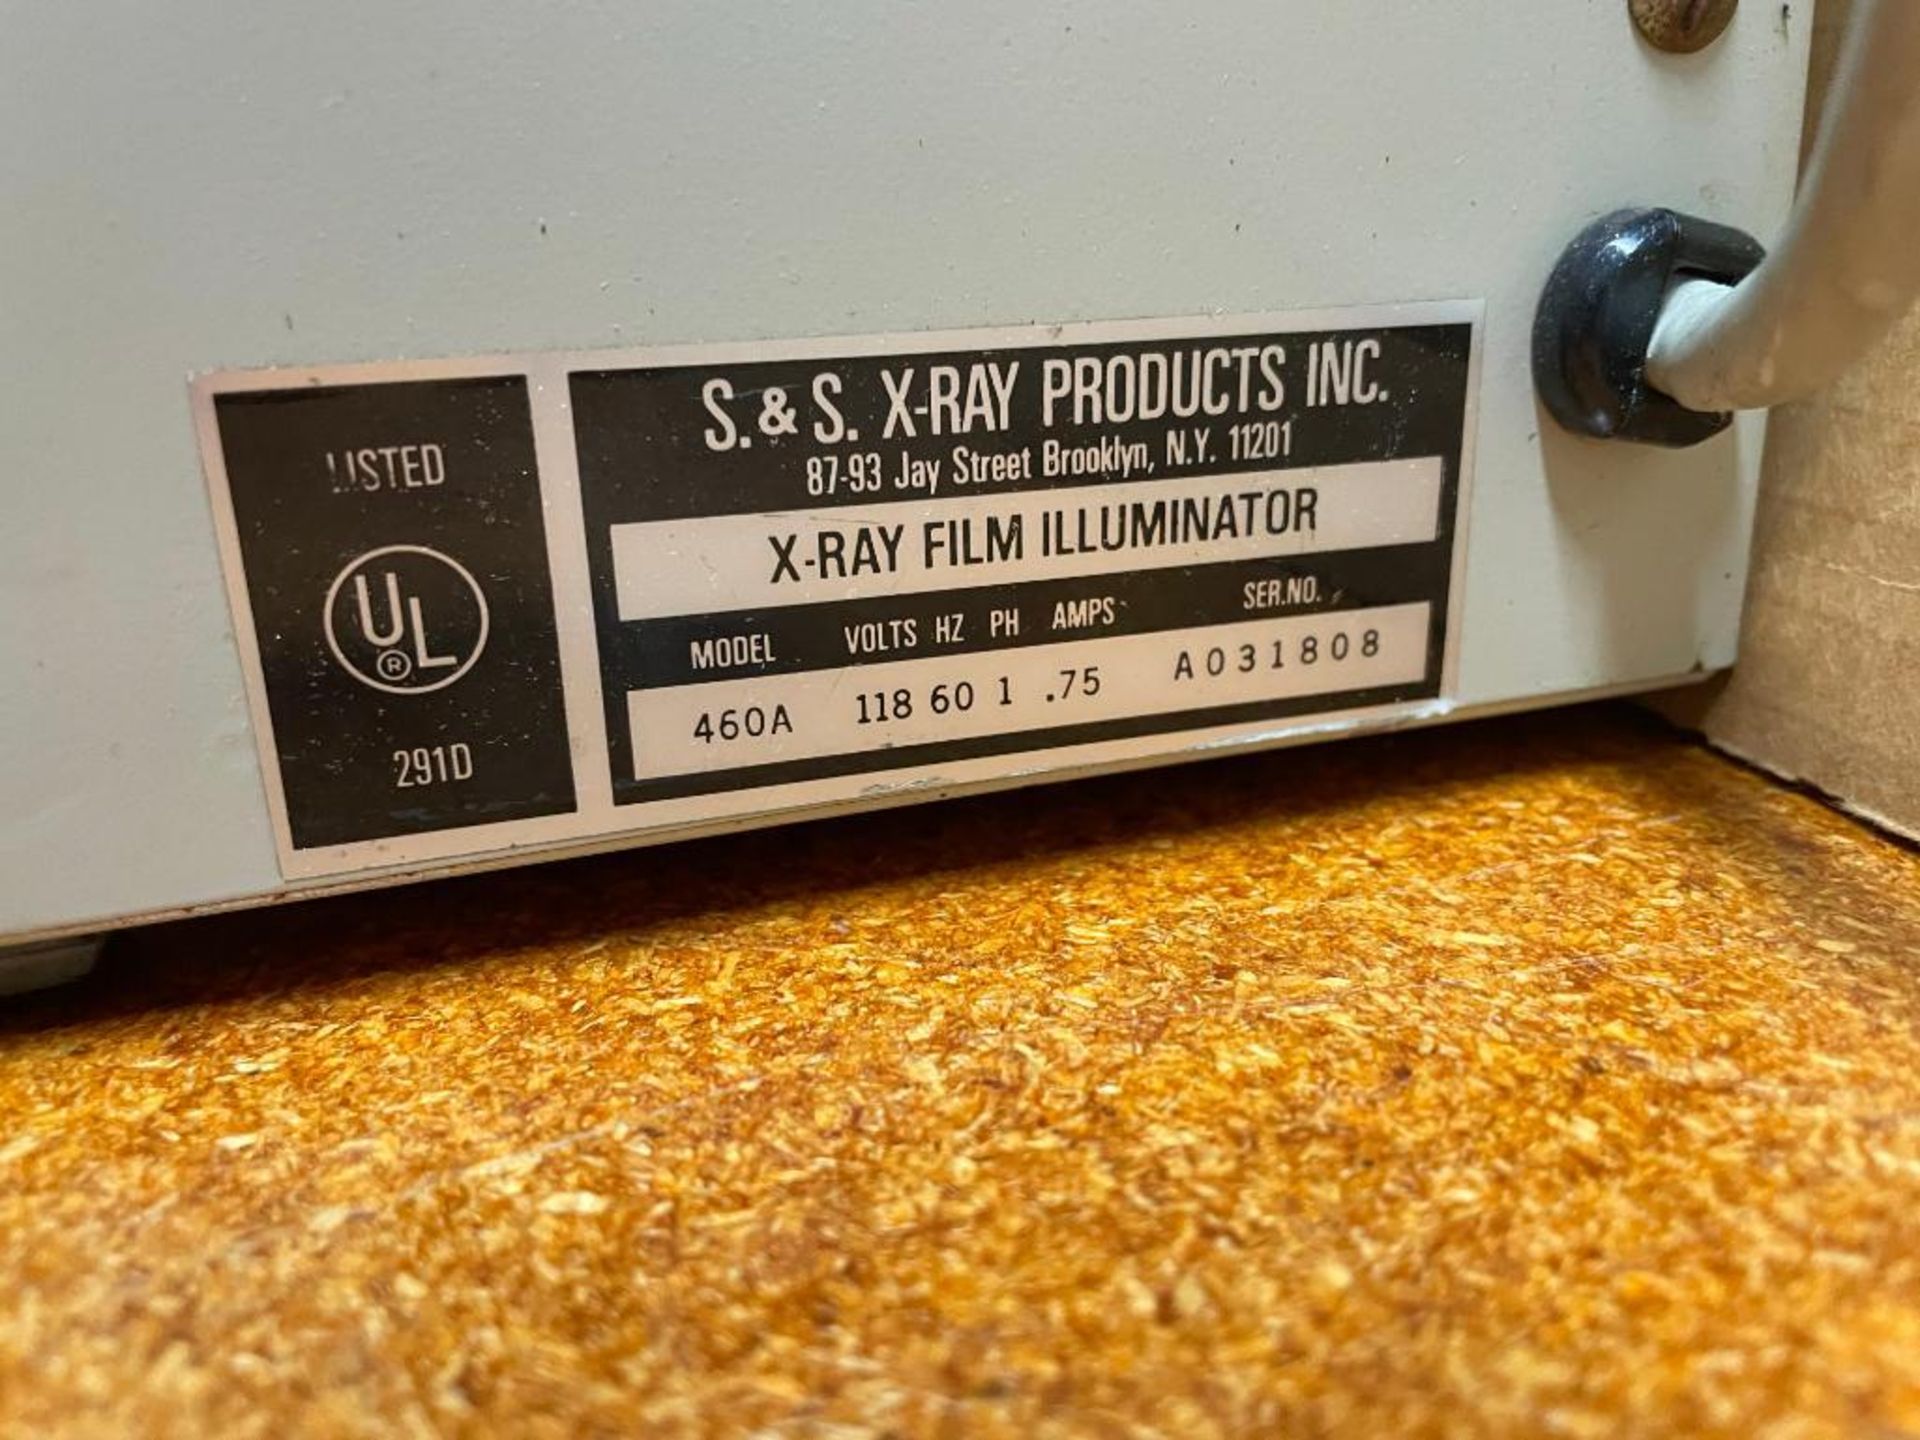 S & S X-RAY 460A FILM ILLUMINATOR NEGATIVE VIEWER LIGHT BOX BRAND/MODEL: S&S 460A SIZE: 18.5" X 14" - Image 6 of 6